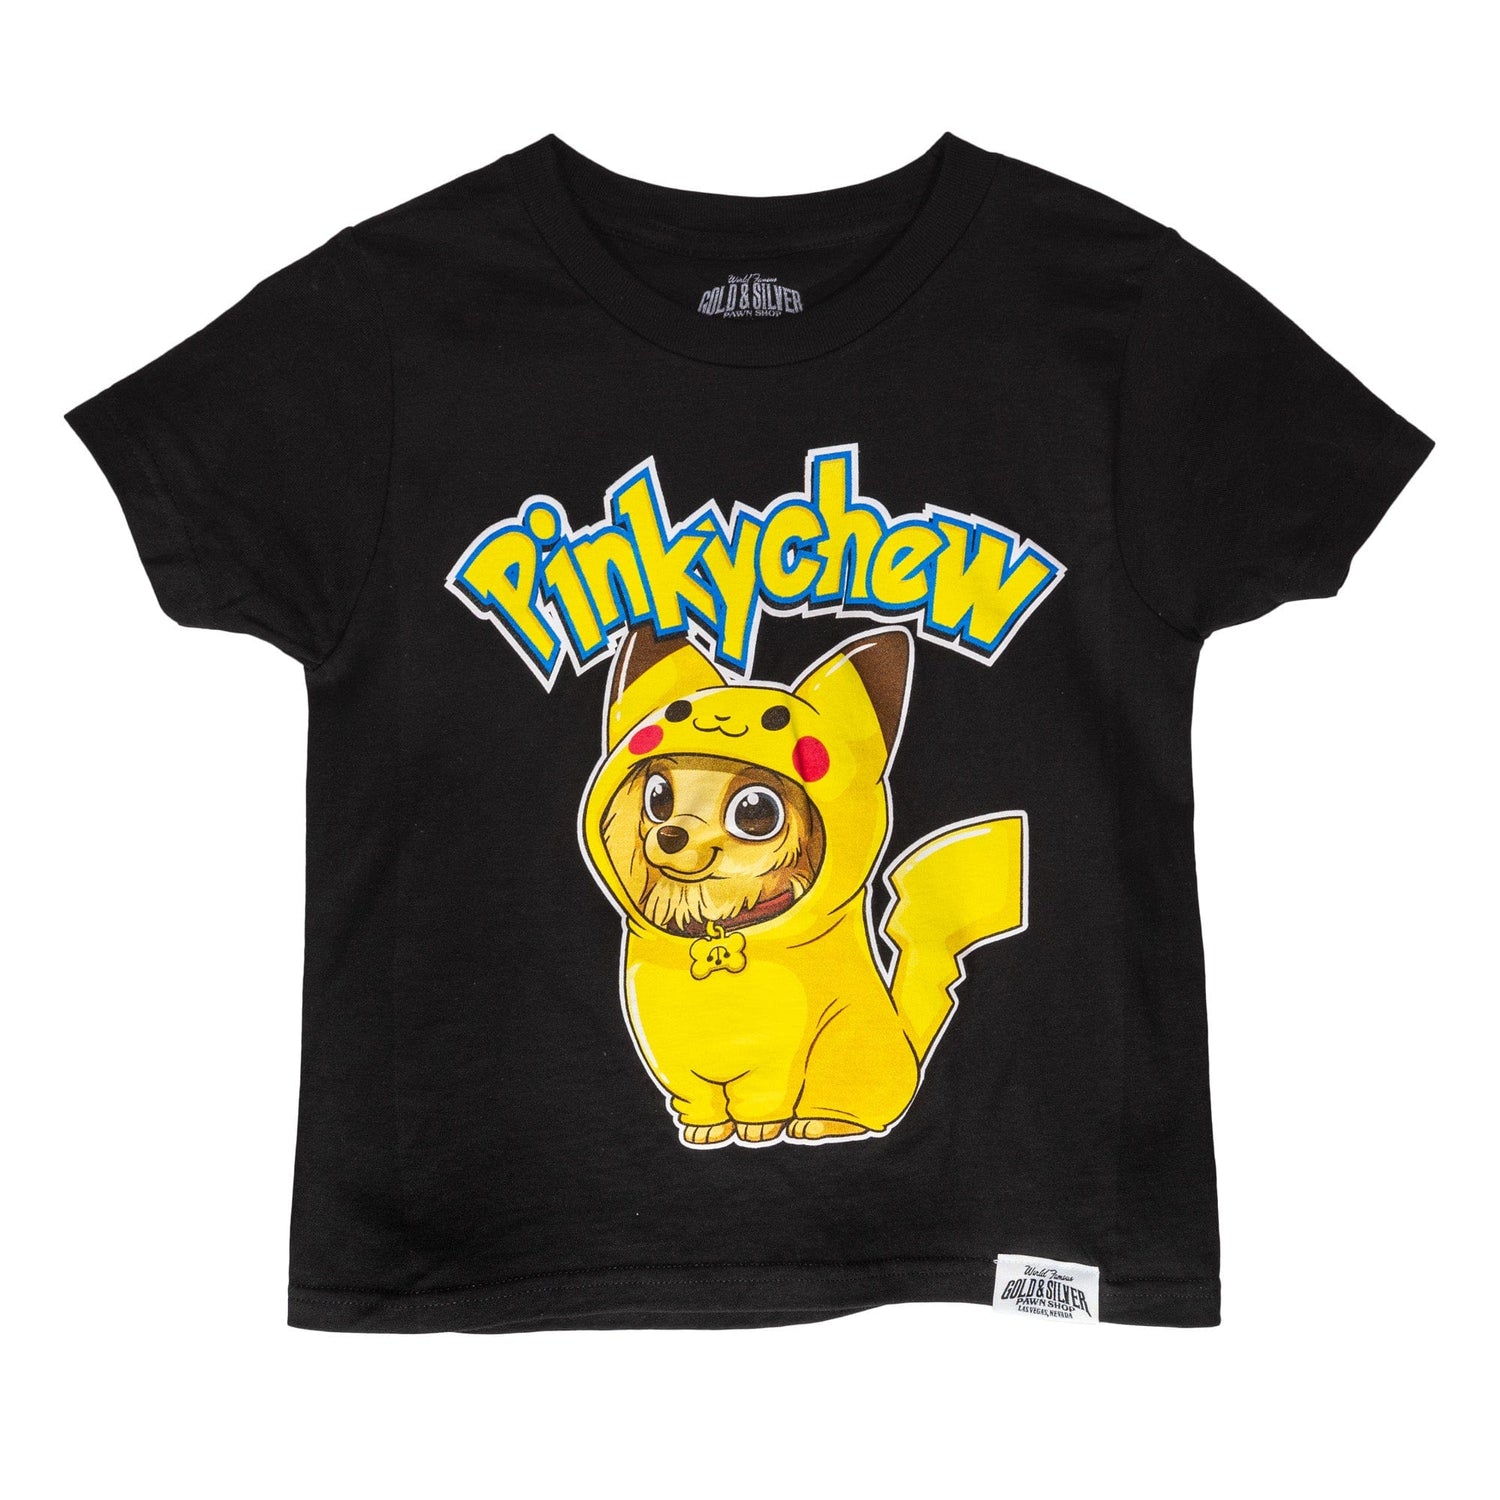 Kids "Pinkychew" T-Shirt Black